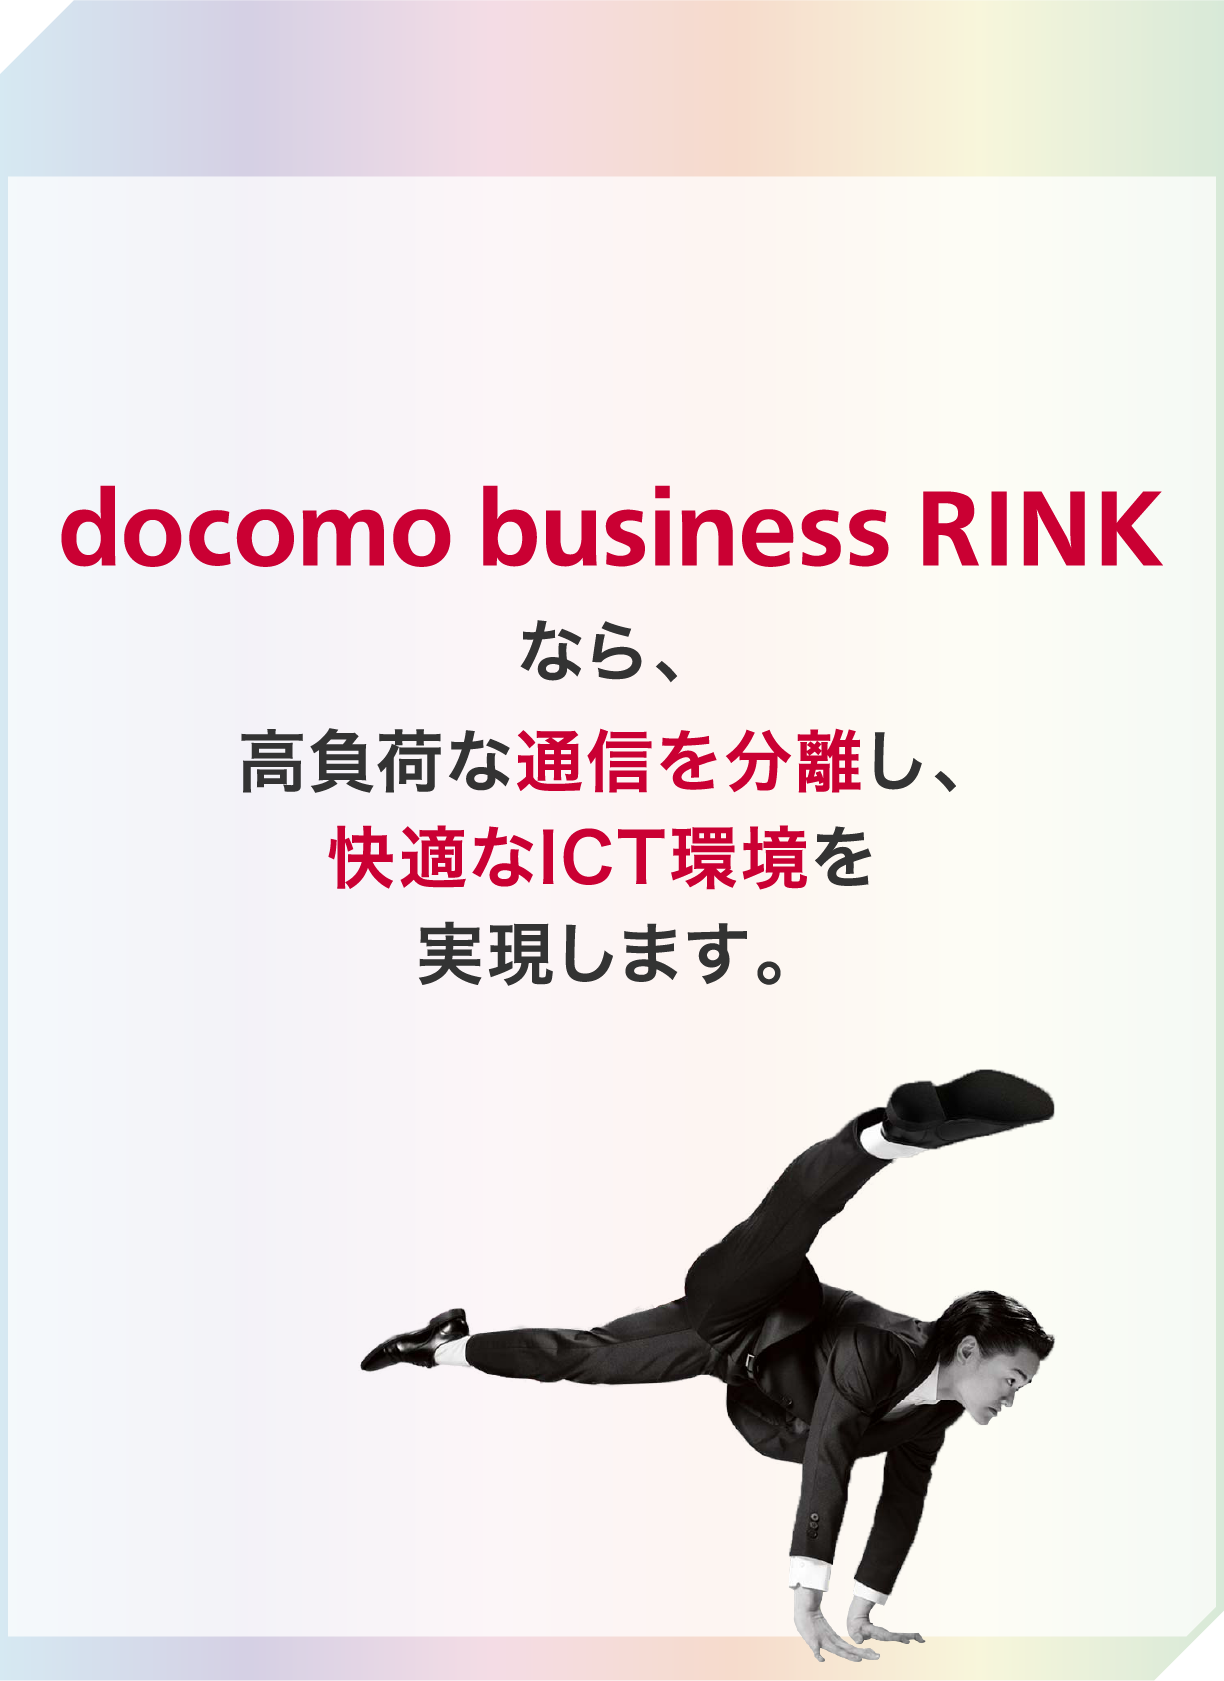 docomo business RINKなら、高負荷な通信を分離し、快適なICT環境を実現します。